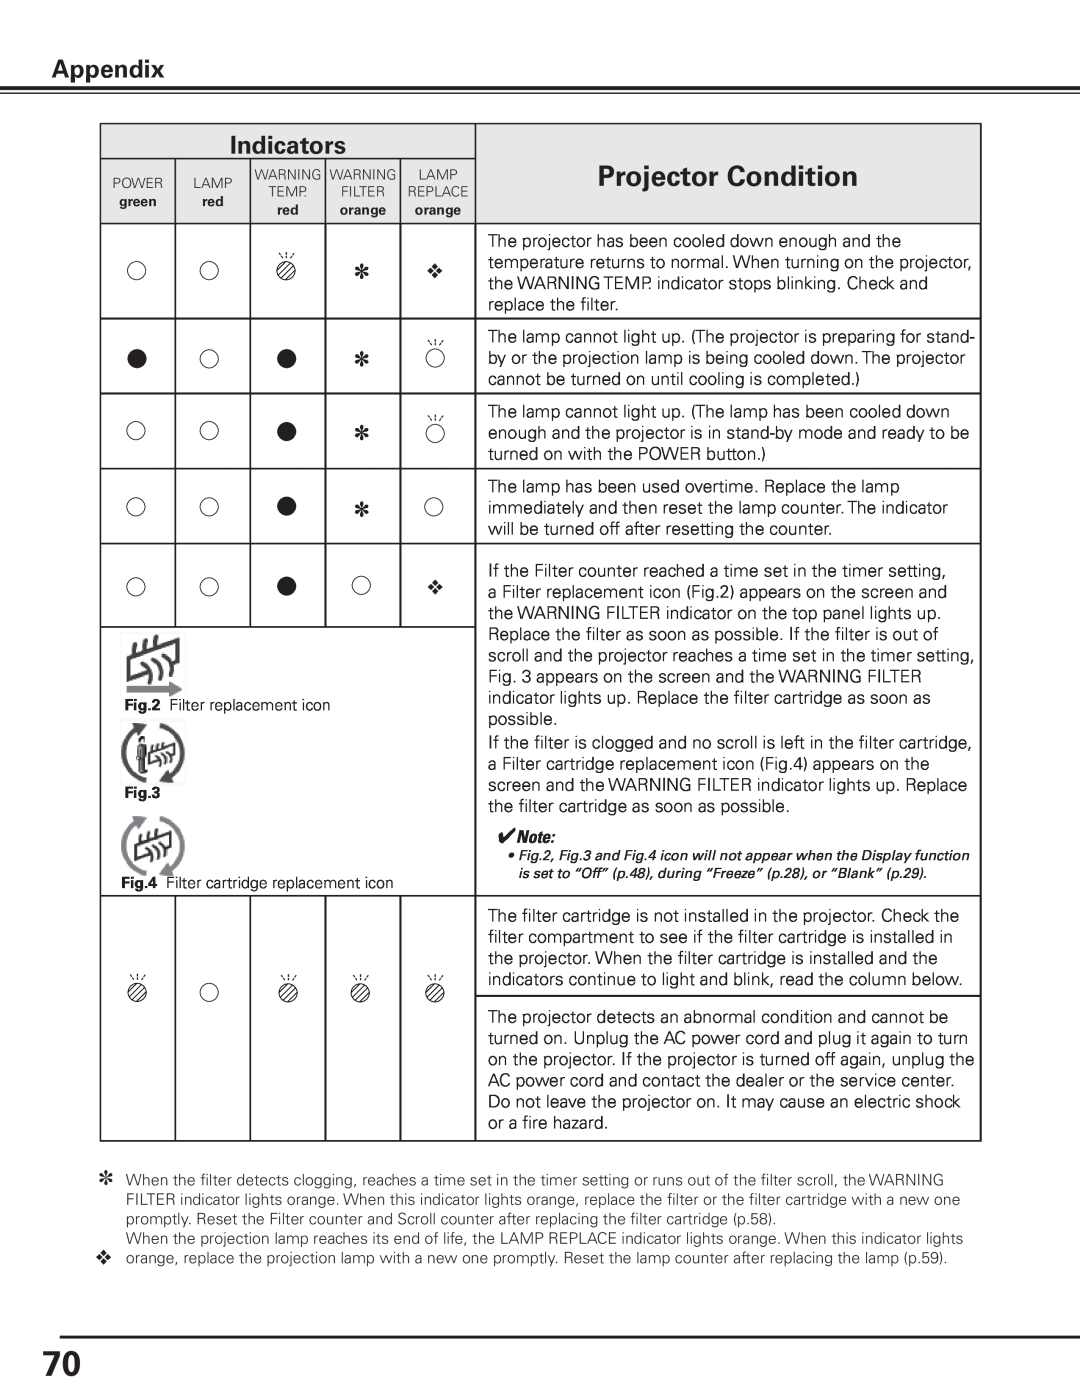 Canon 7585 manual Appendix Indicators, Projector Condition, Note 